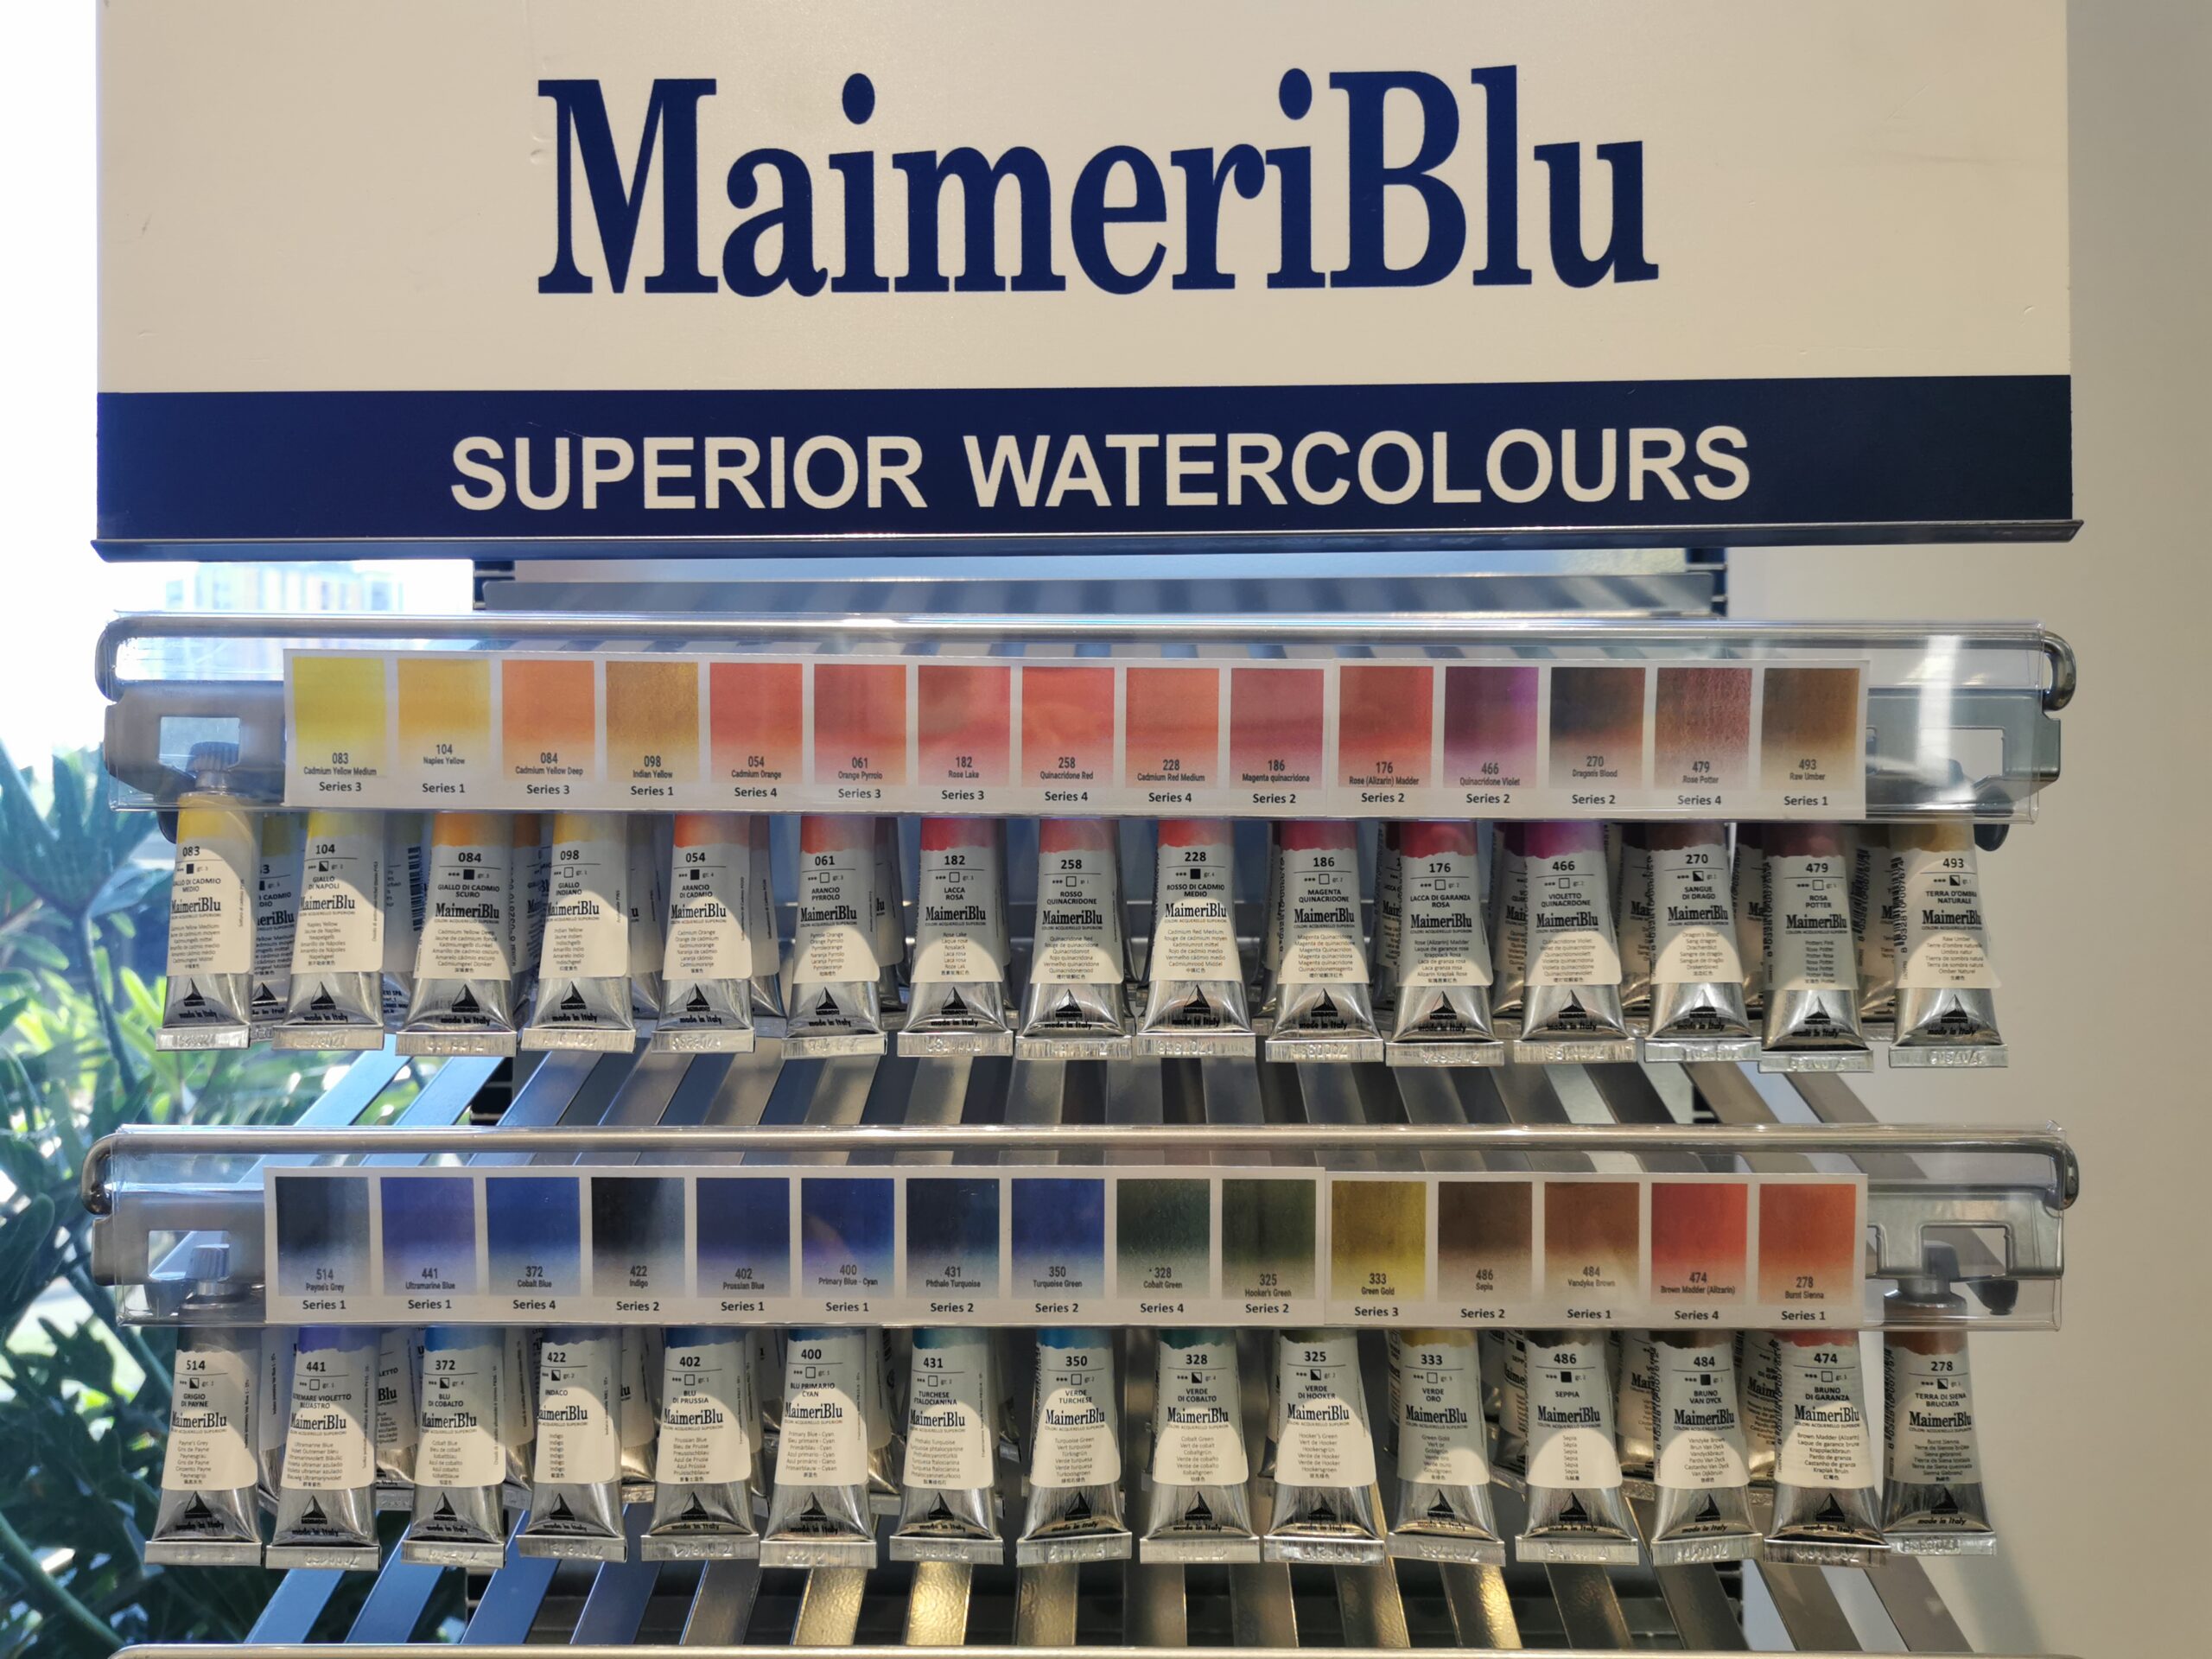 MaimeriBlu Watercolor - Quinacridone Lake, 12ml